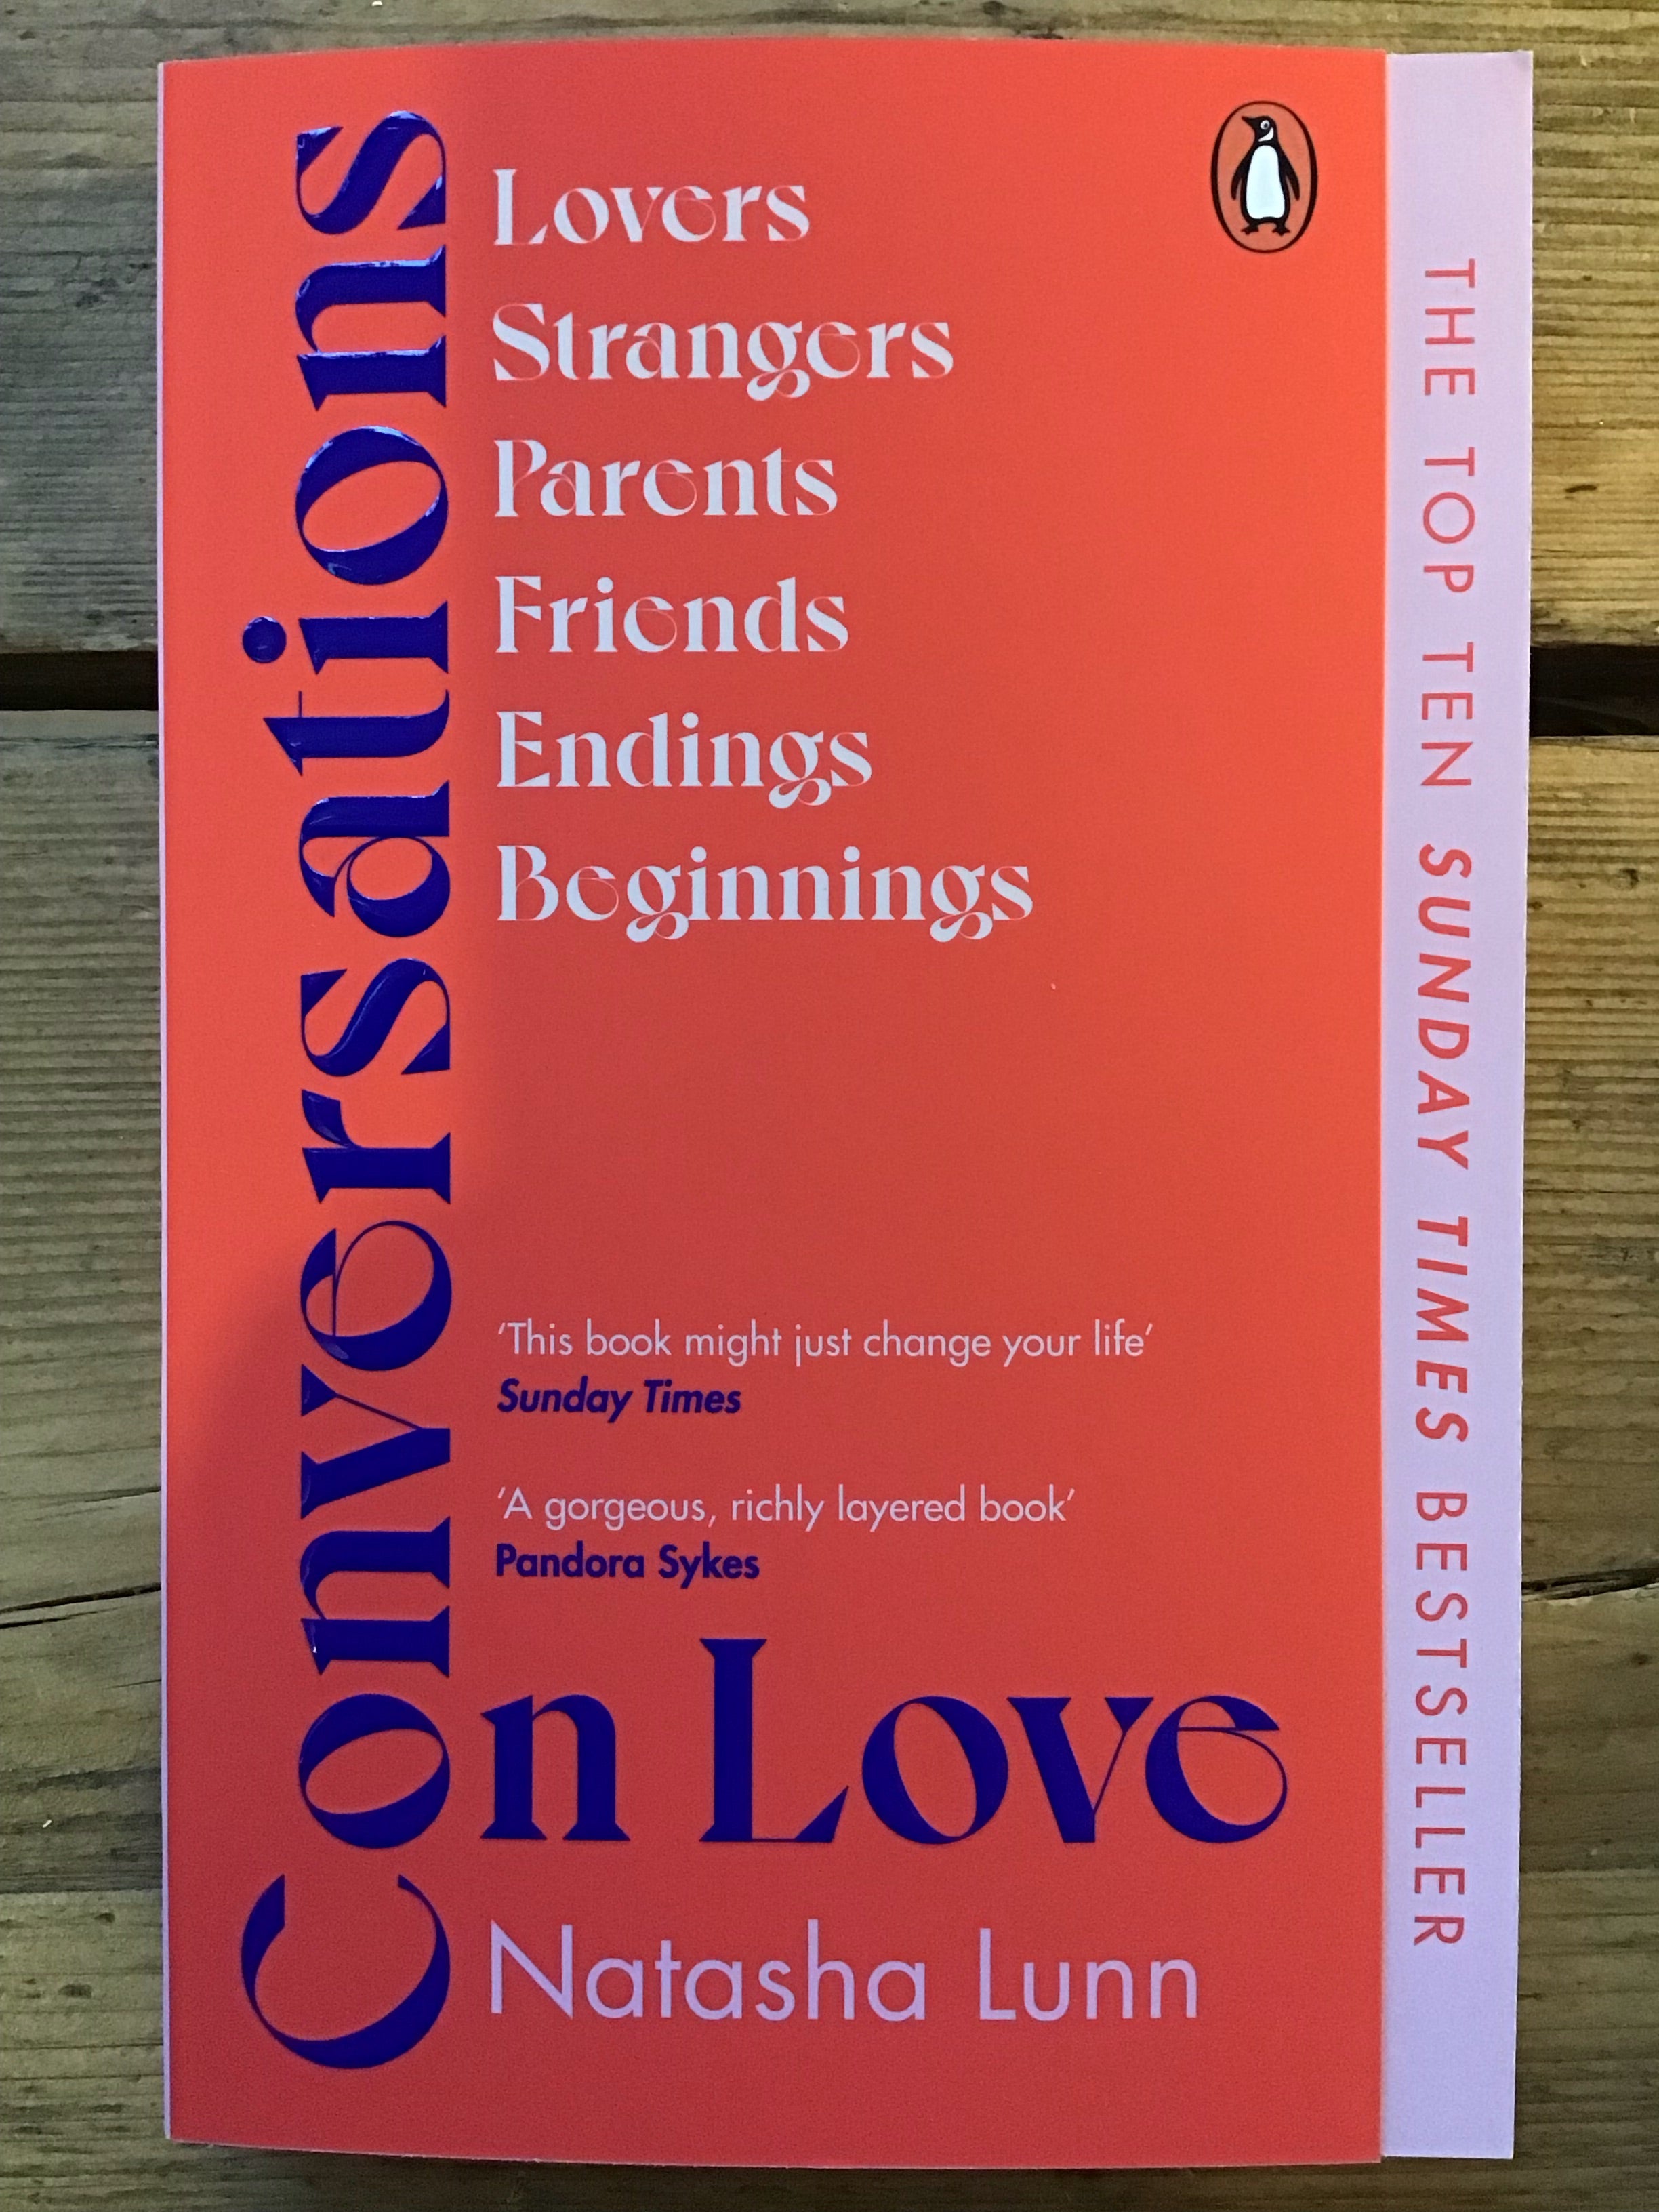 Conversations on Love – The Feminist Bookshop